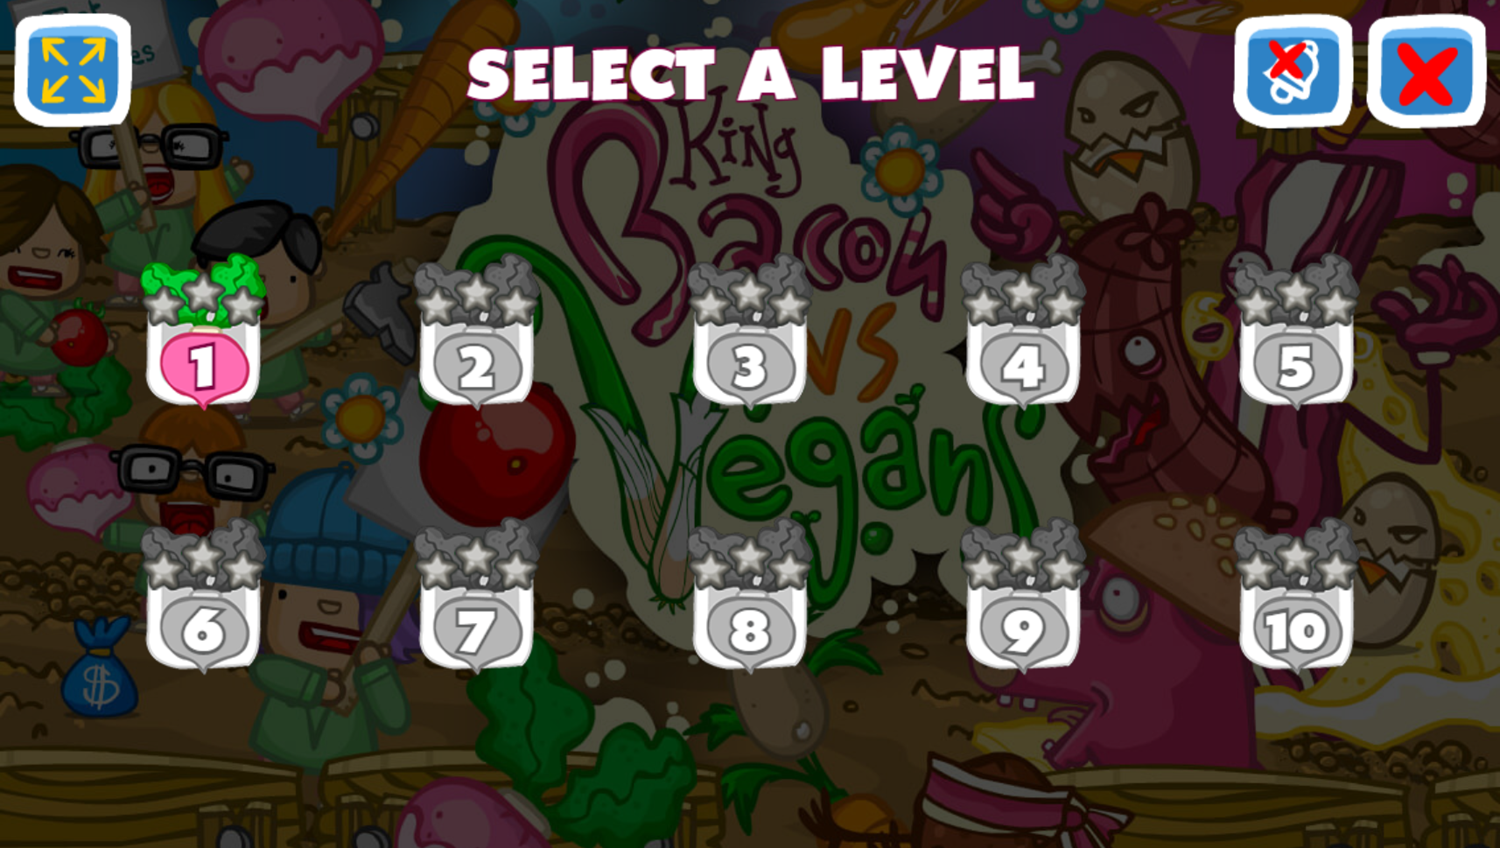 King Bacon vs Vegans Game Select Level Screenshot.